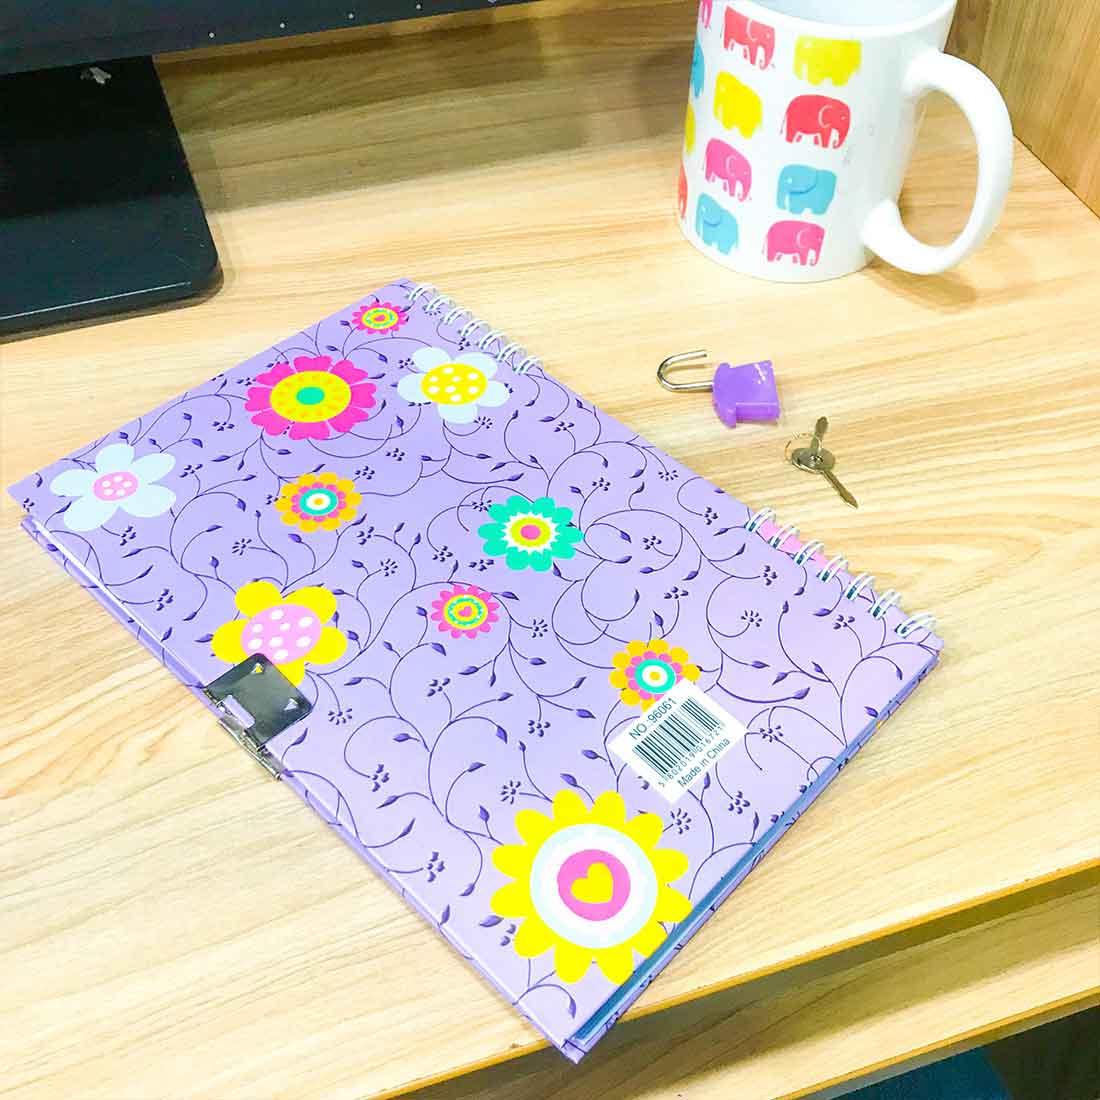 Notebook Diary - Floral Design - for Kids, Children, School Student, Return Gifts - ApkaMart